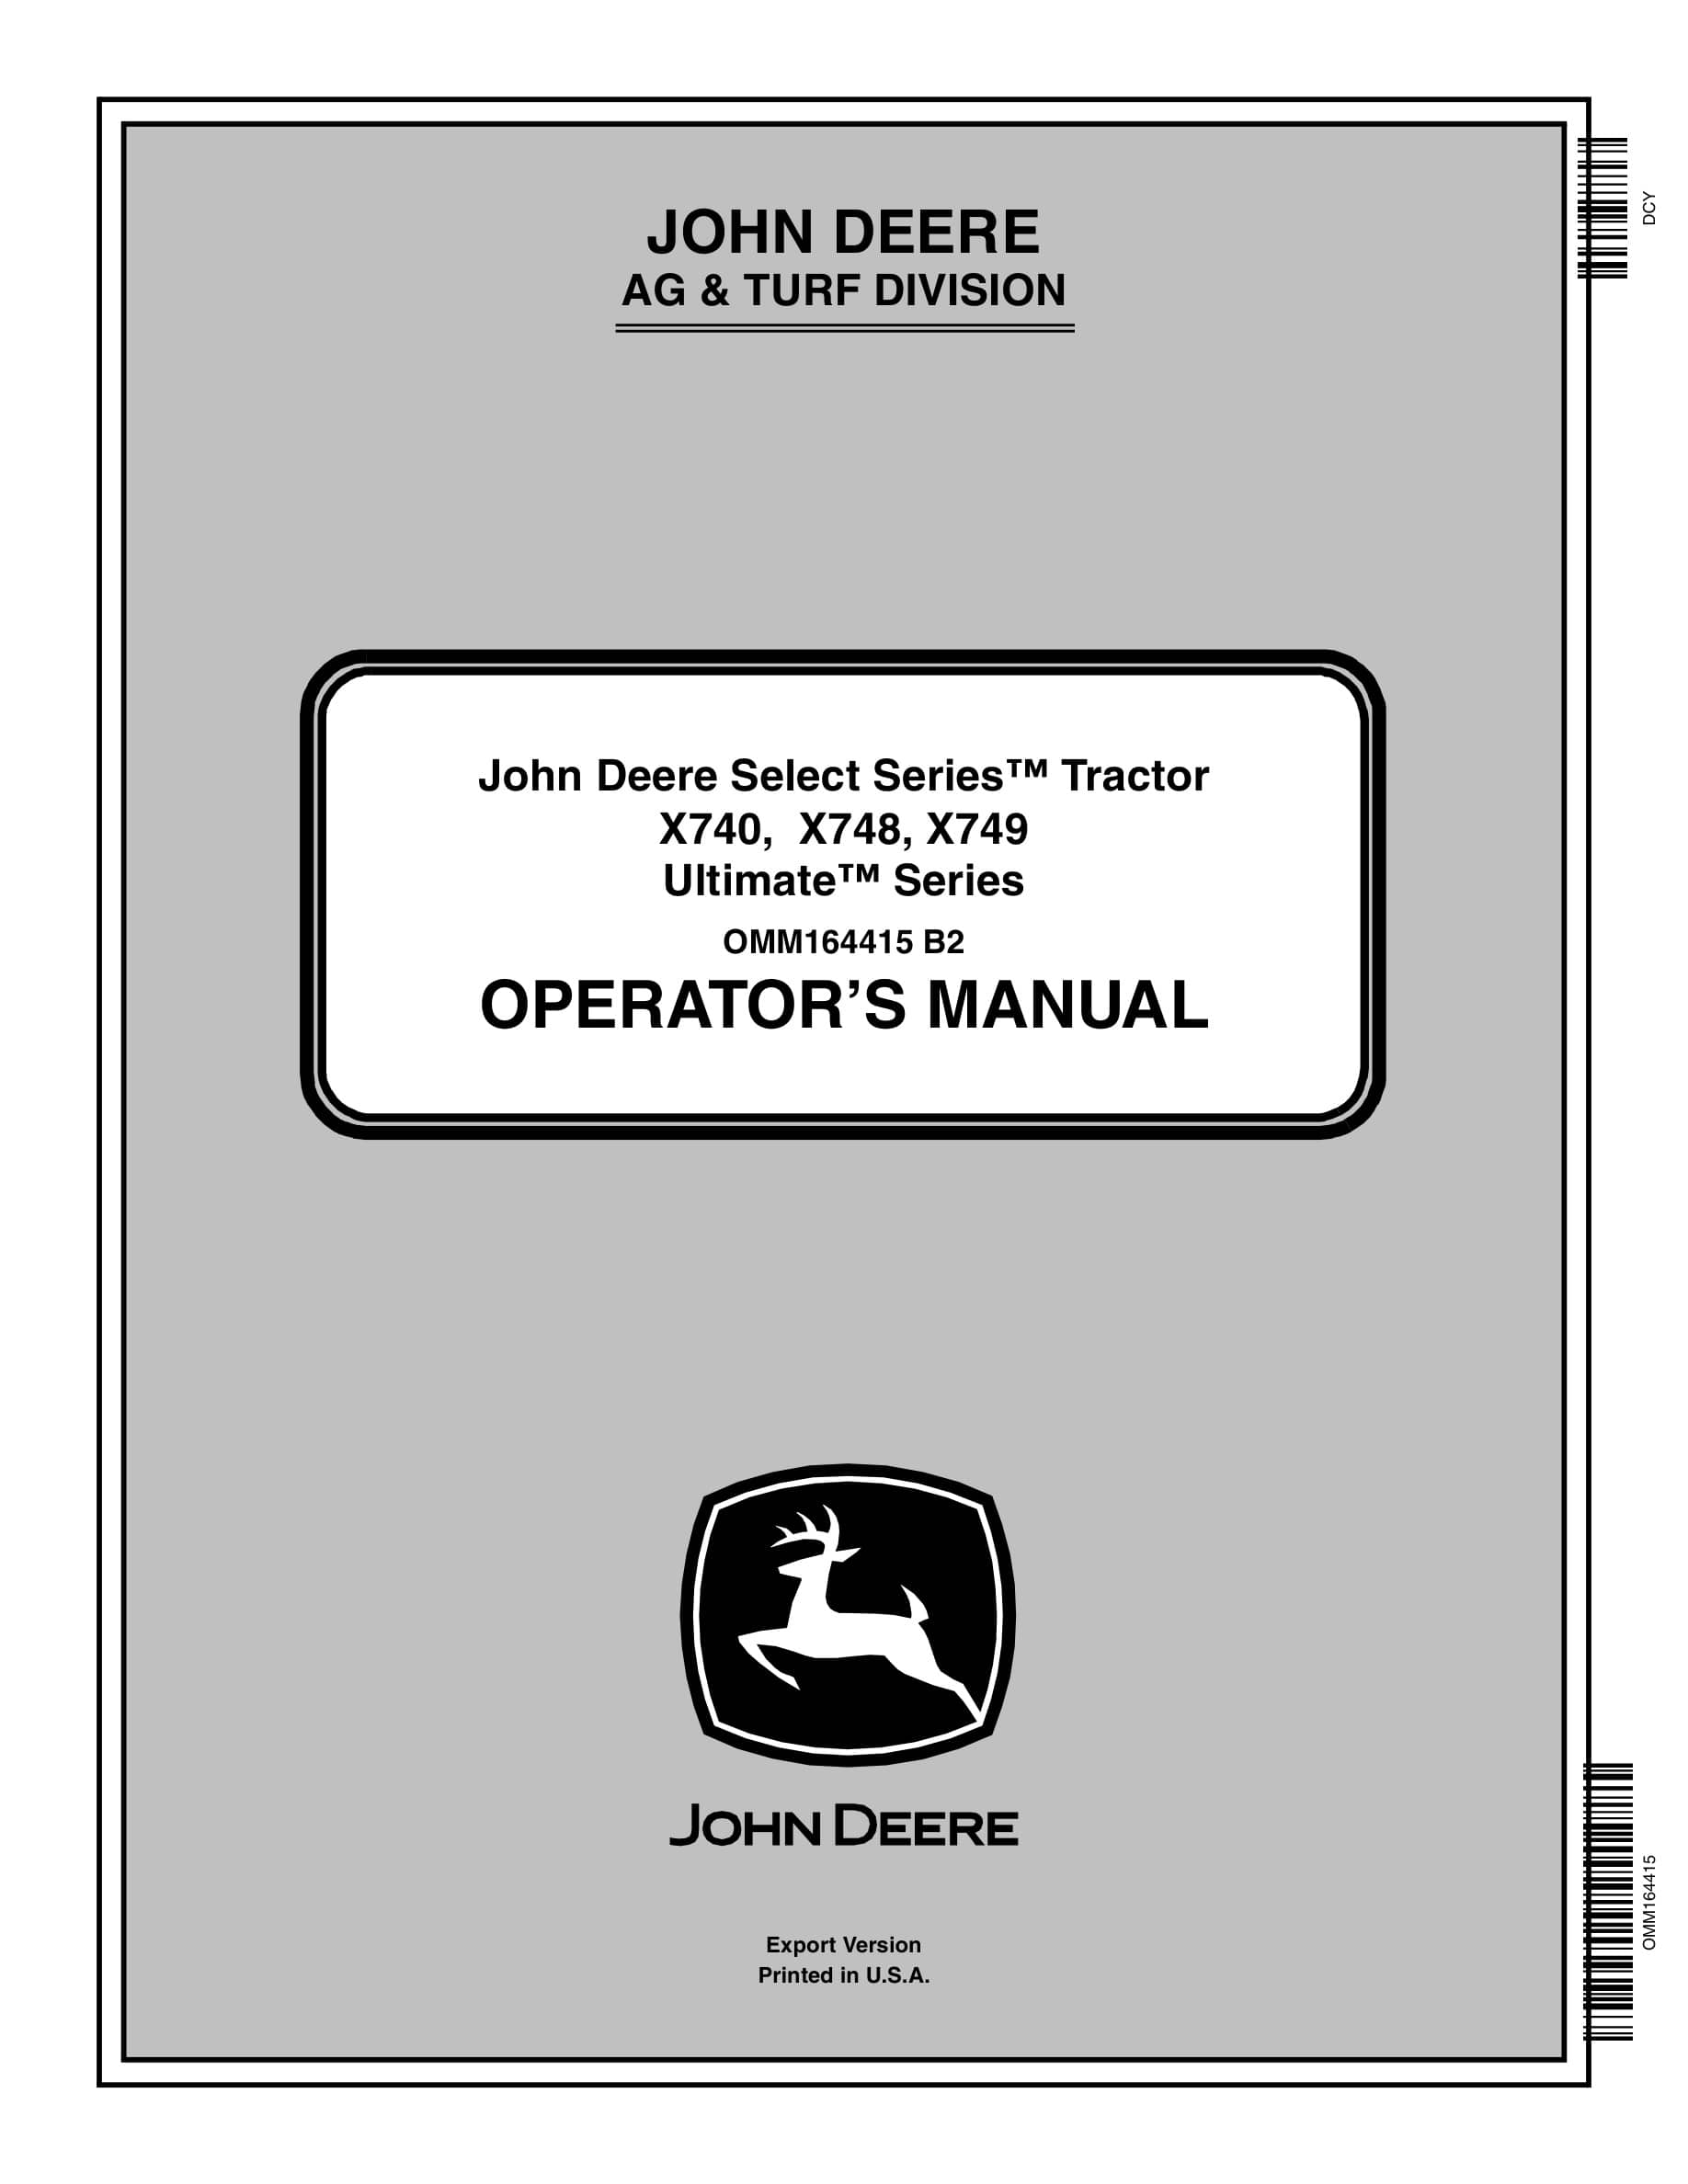 John Deere X740, X748, X749 Ultimate Series Tractors Operator Manual OMM164415-1